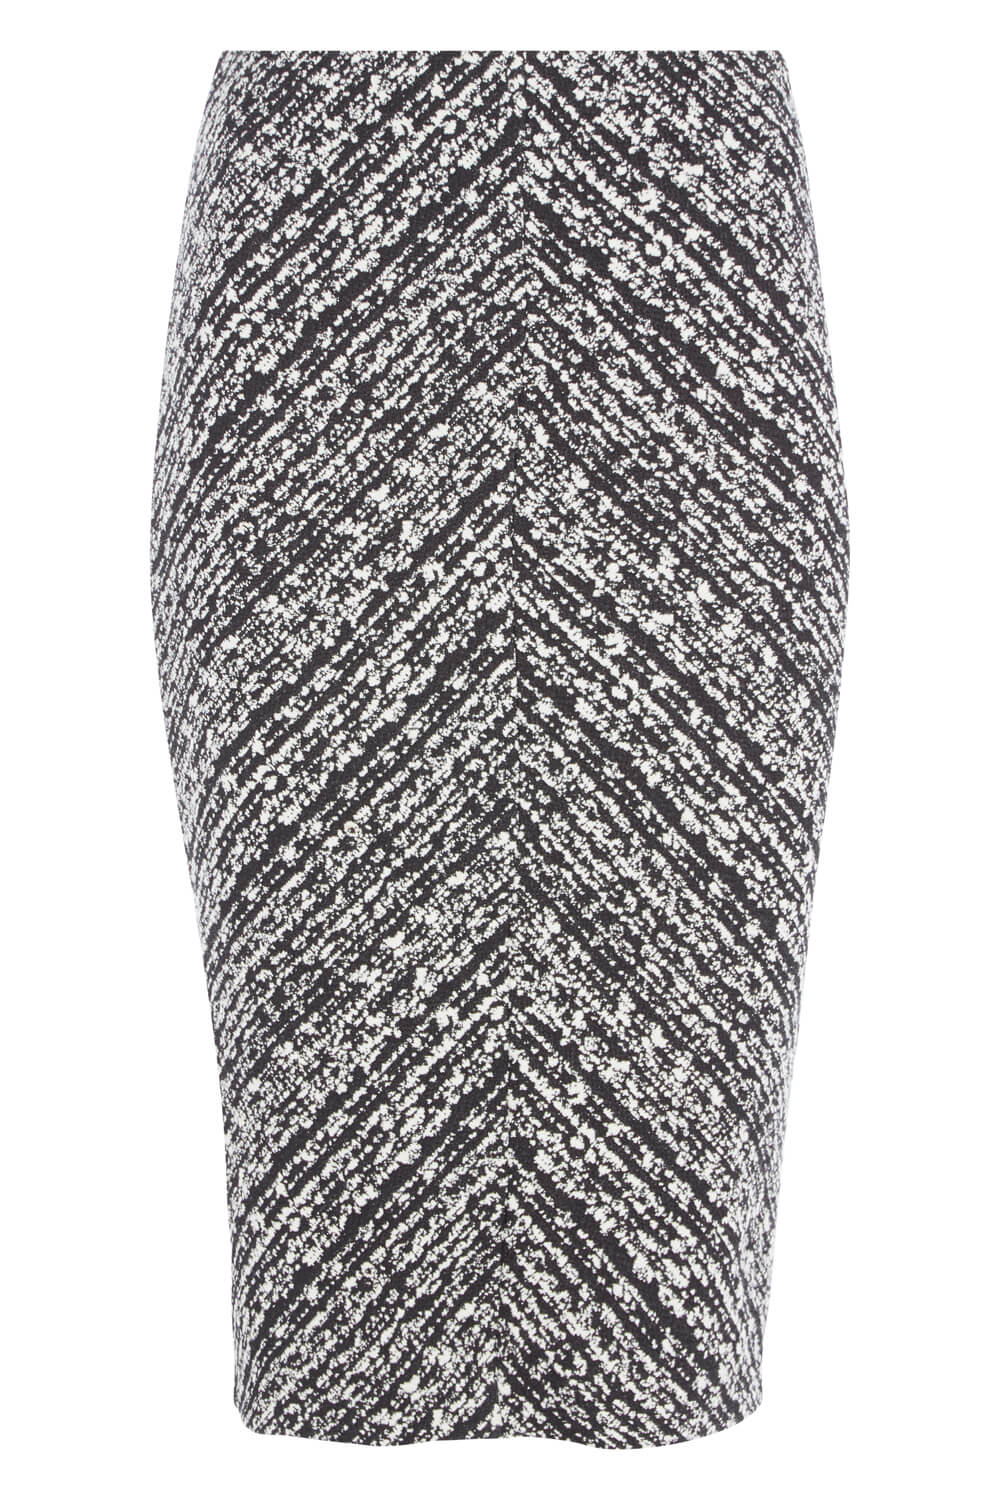 Charcoal Textured Chevron Skirt, Image 4 of 4